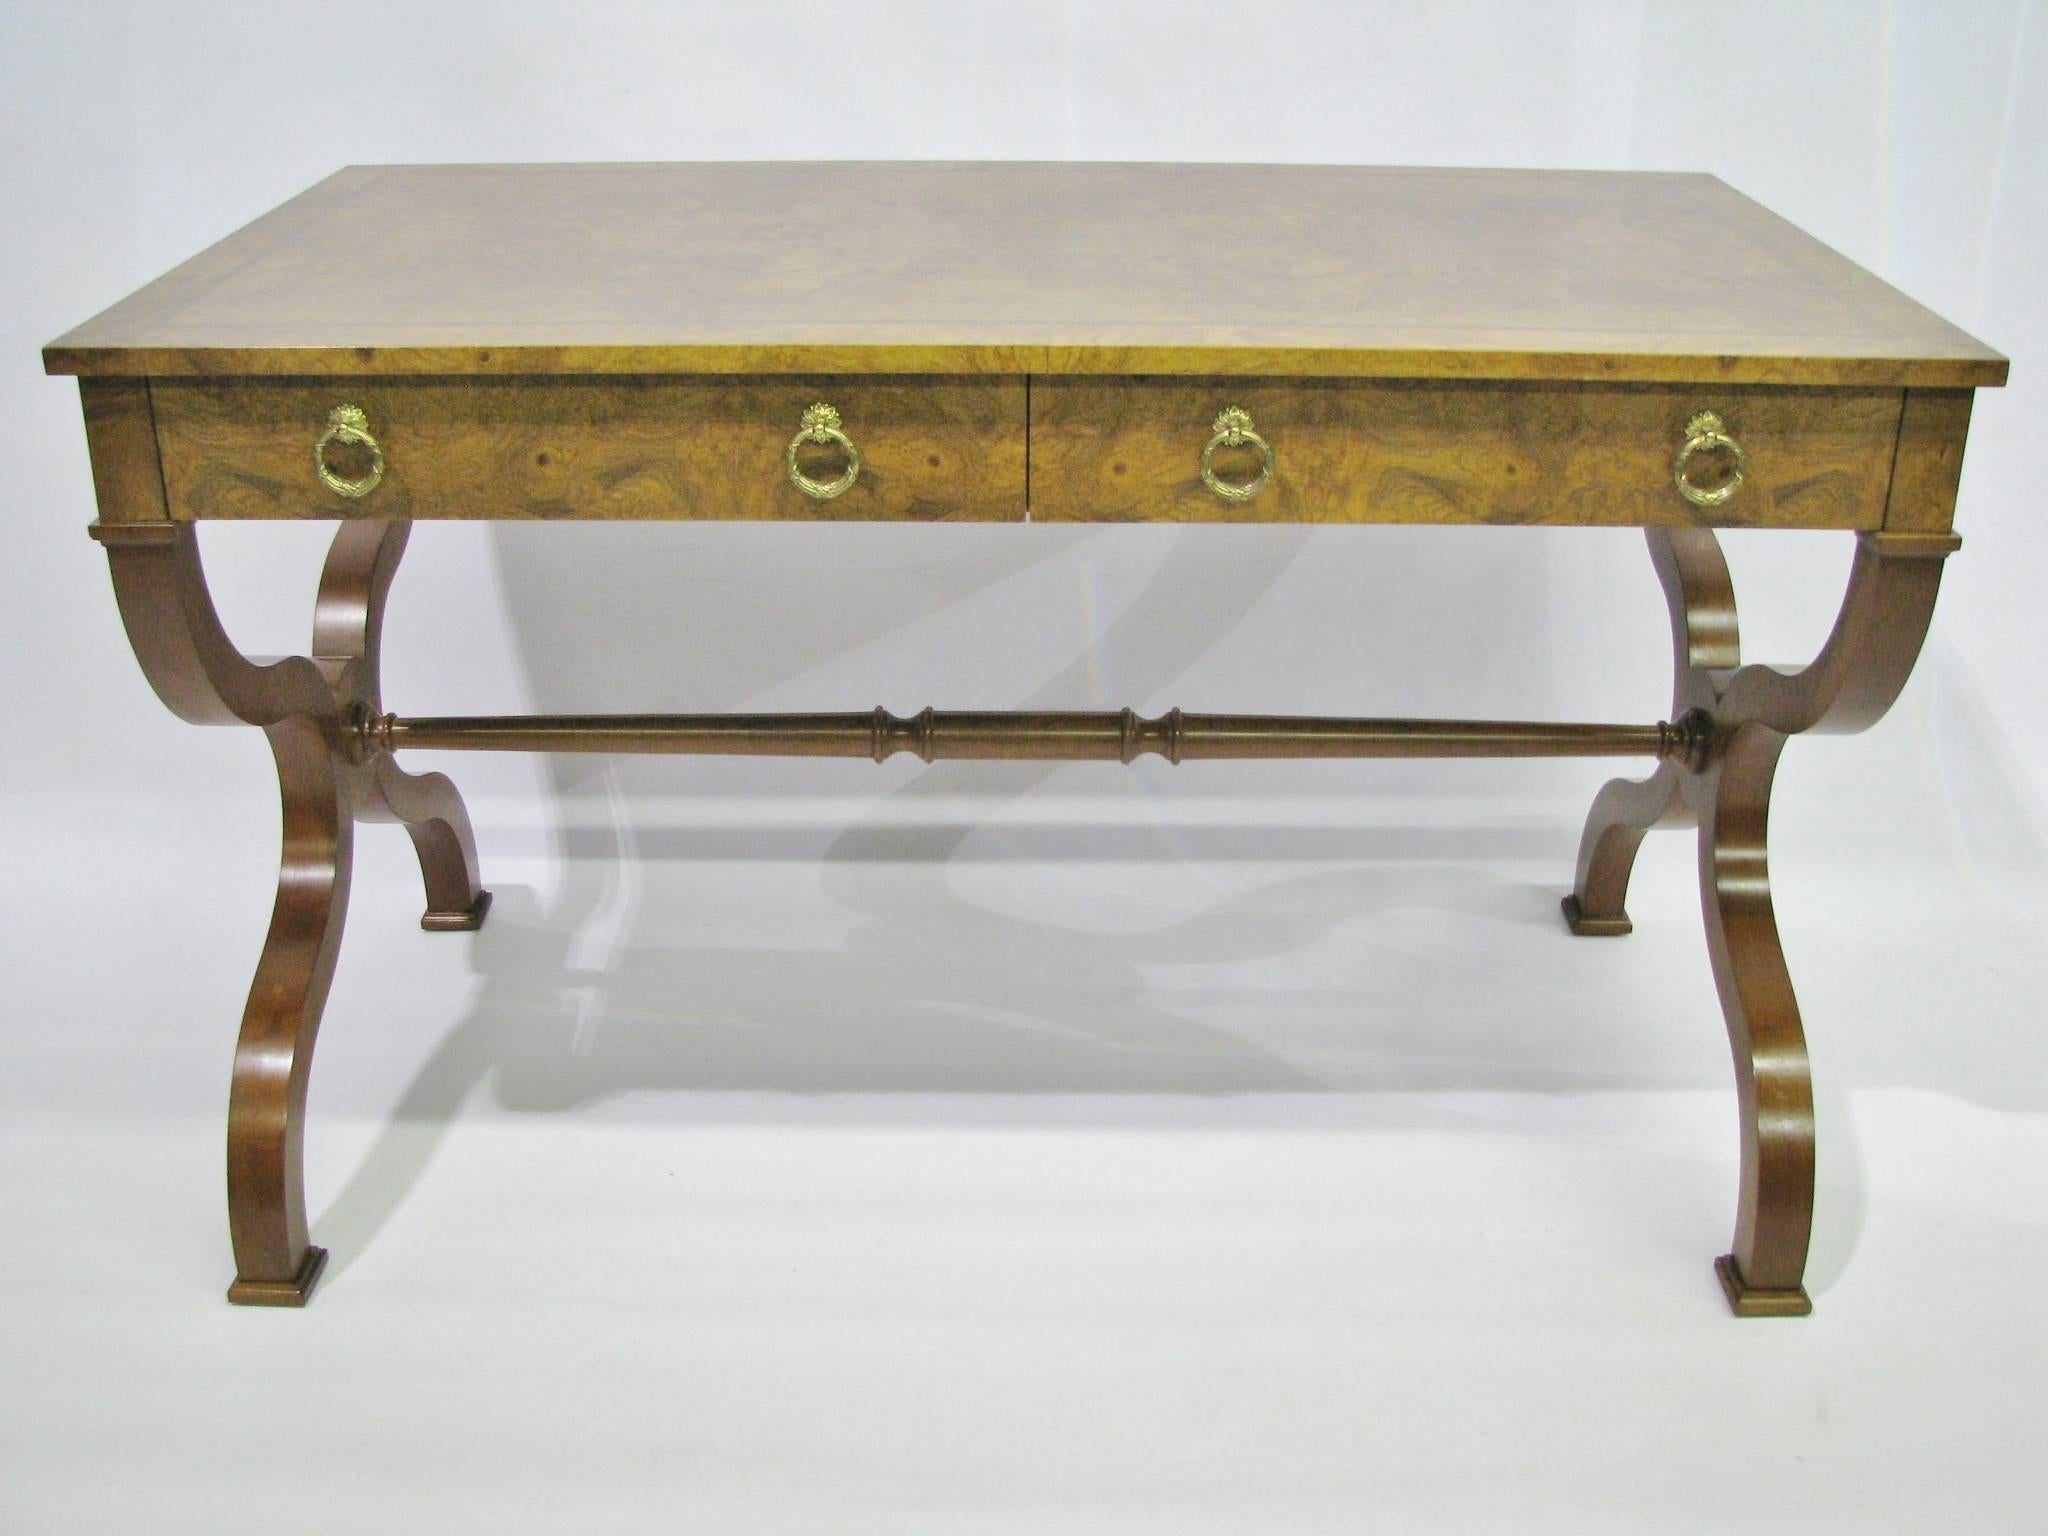 Neoclassical Baker Furniture Regency Style Writing Desk with Burled Walnut Veneer For Sale